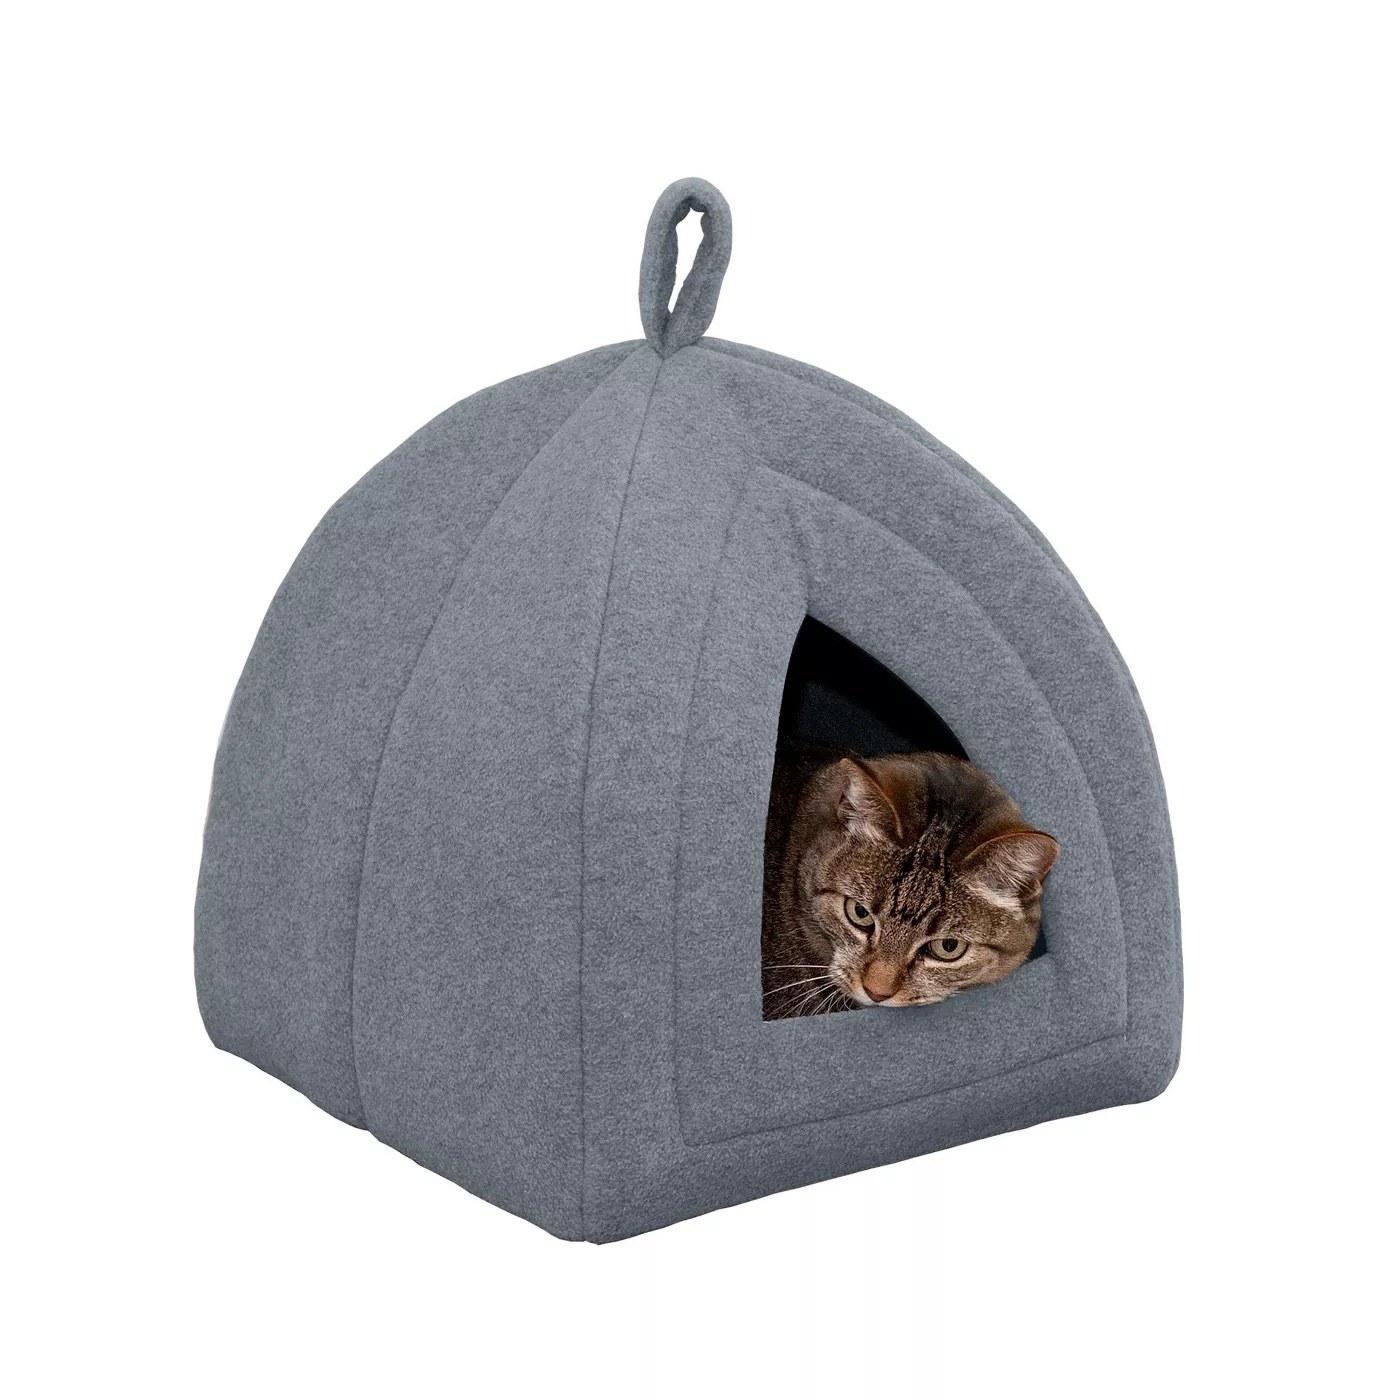 A cat in the pet tent